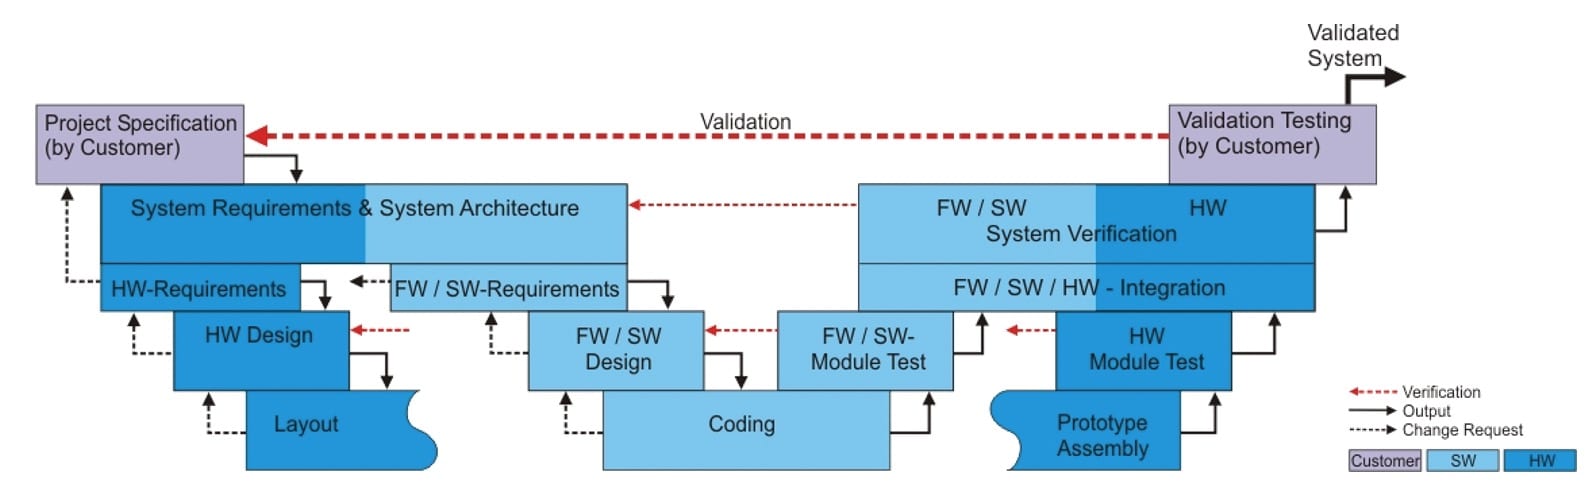 MESCO's V-Model development process